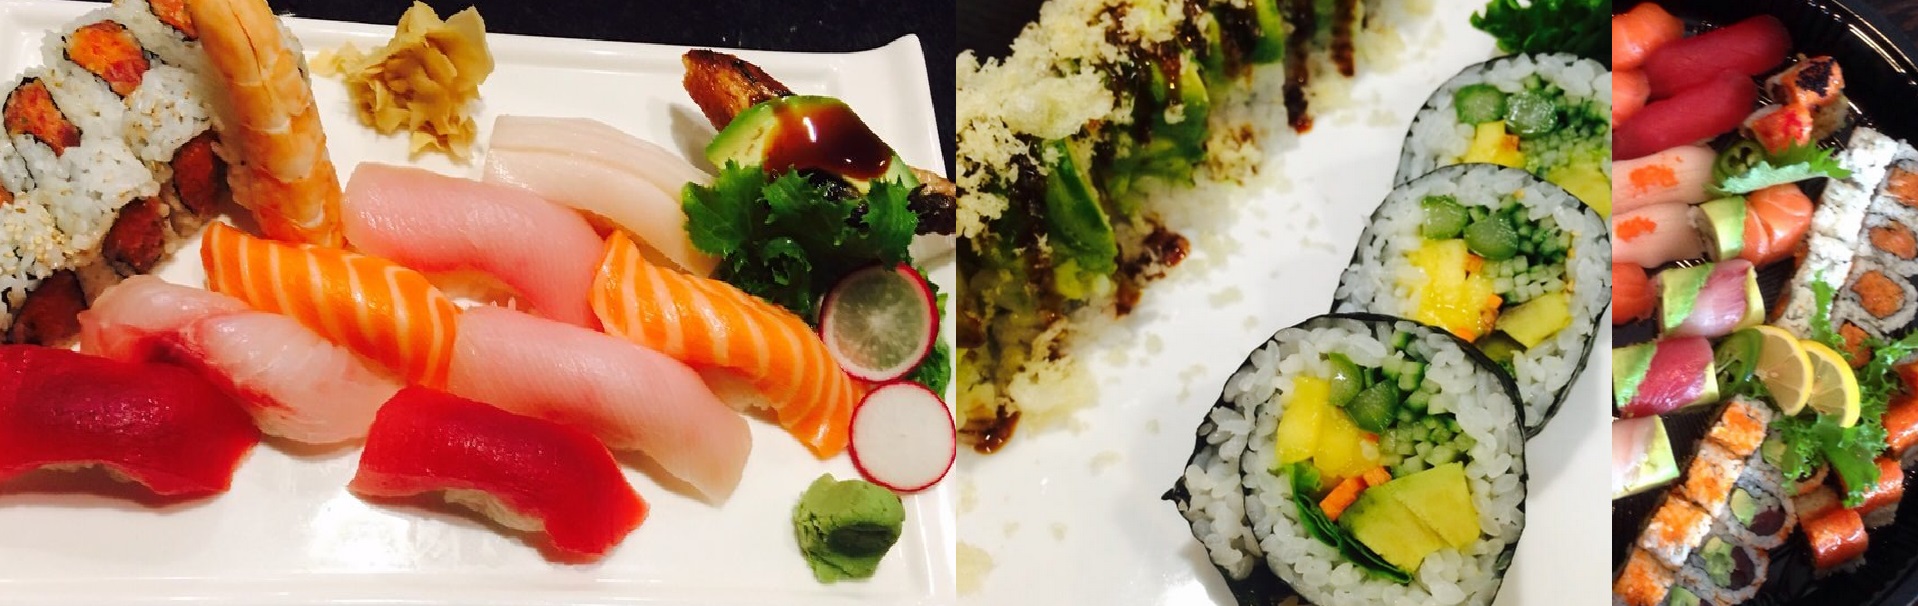 Your favorite Sushi at Watami Sushi